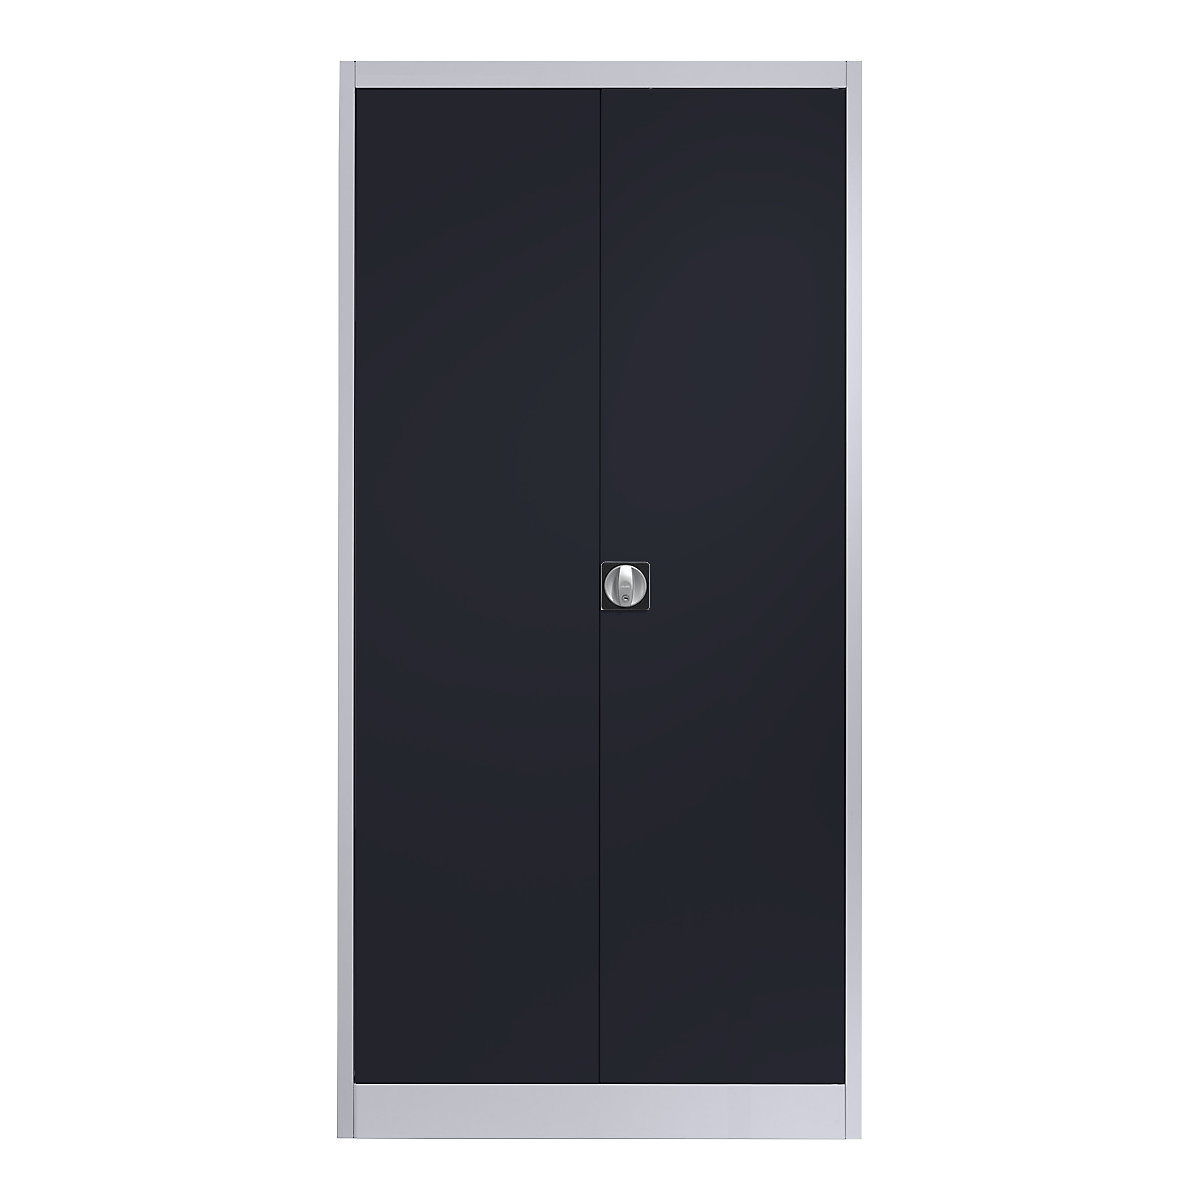 Steel cabinet with double doors – mauser